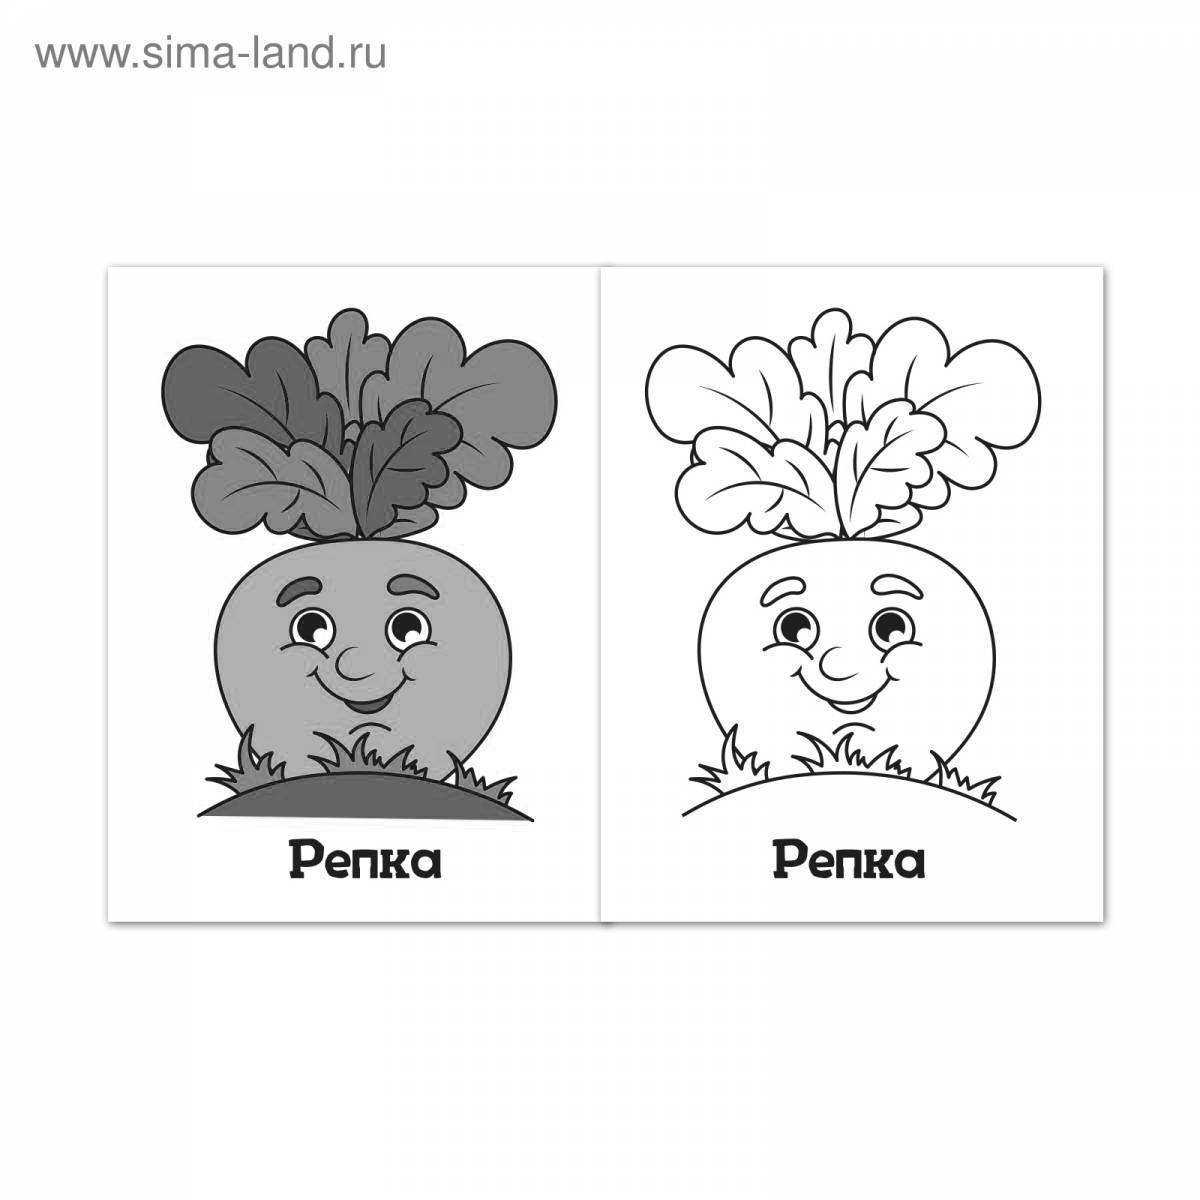 Impressive turnip coloring book for preschoolers